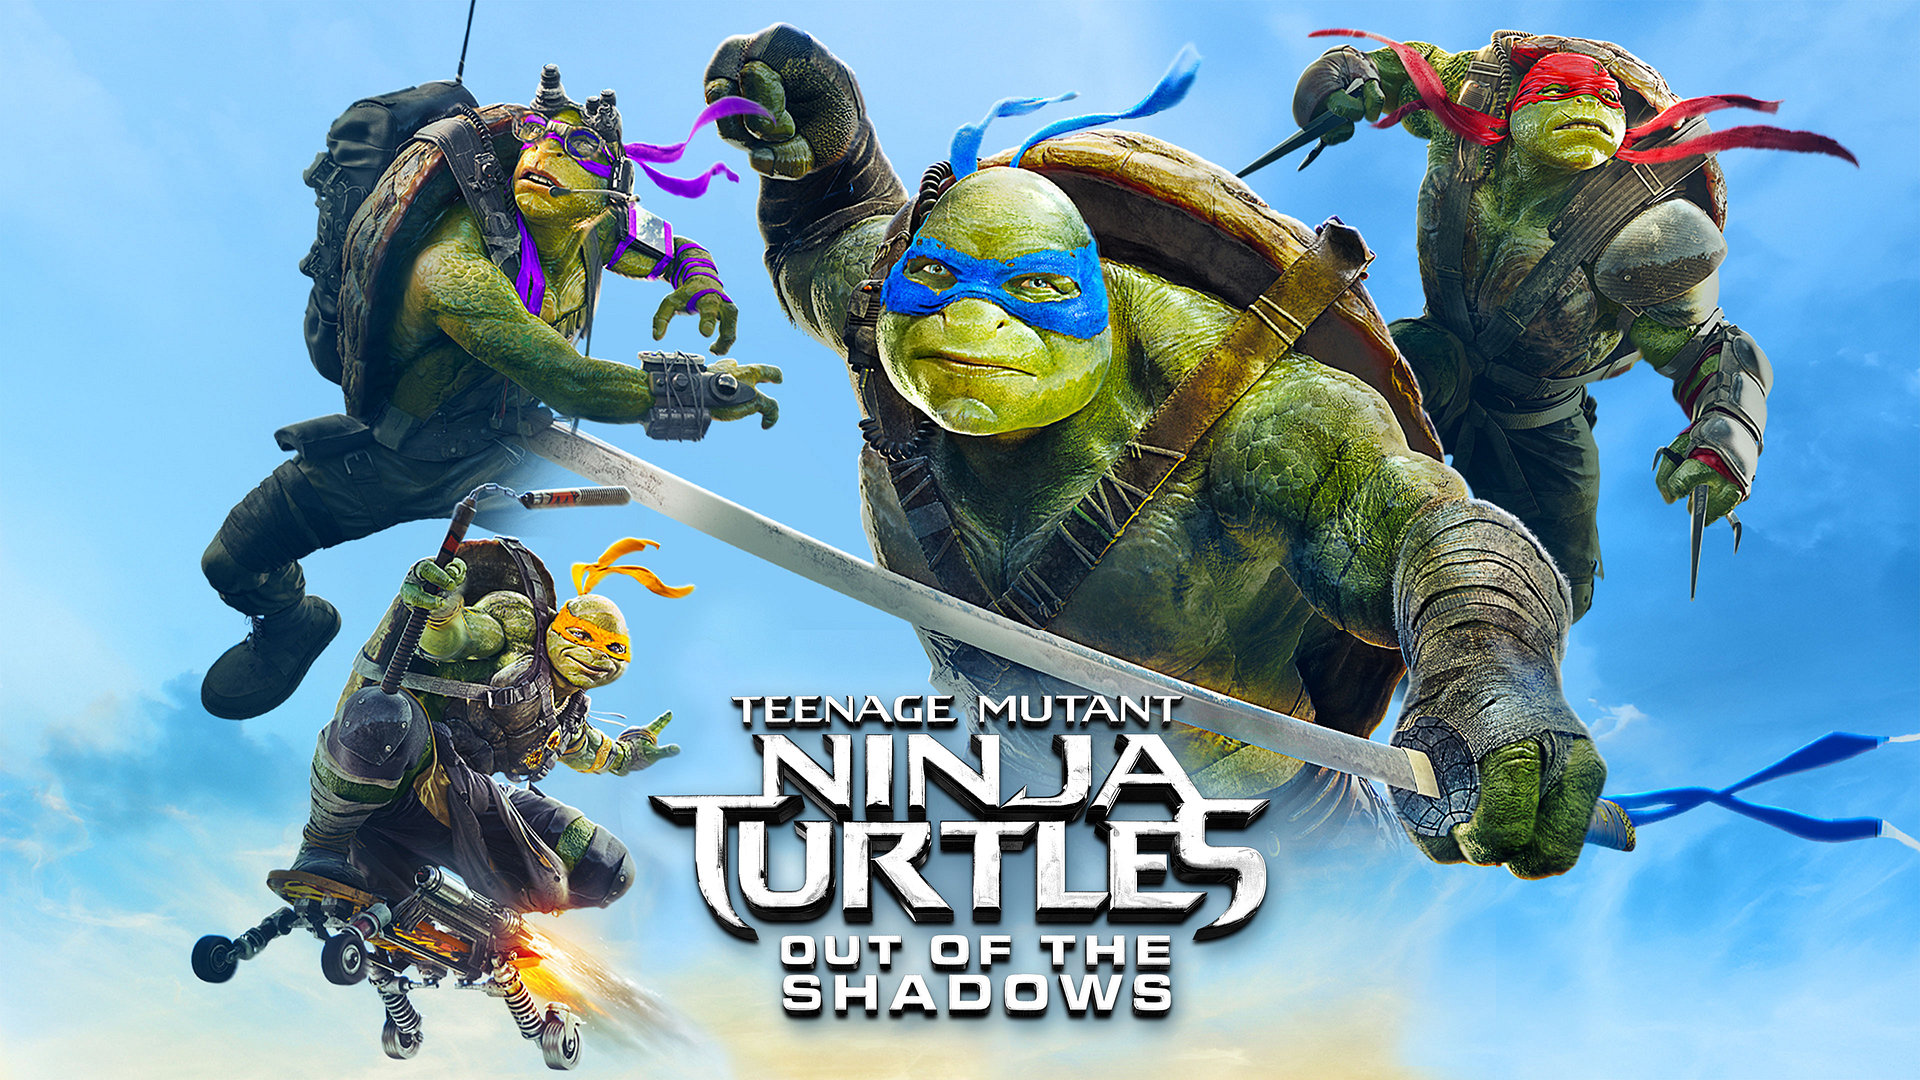 Teenage Mutant Ninja Turtles 2 - Out of the Shadows